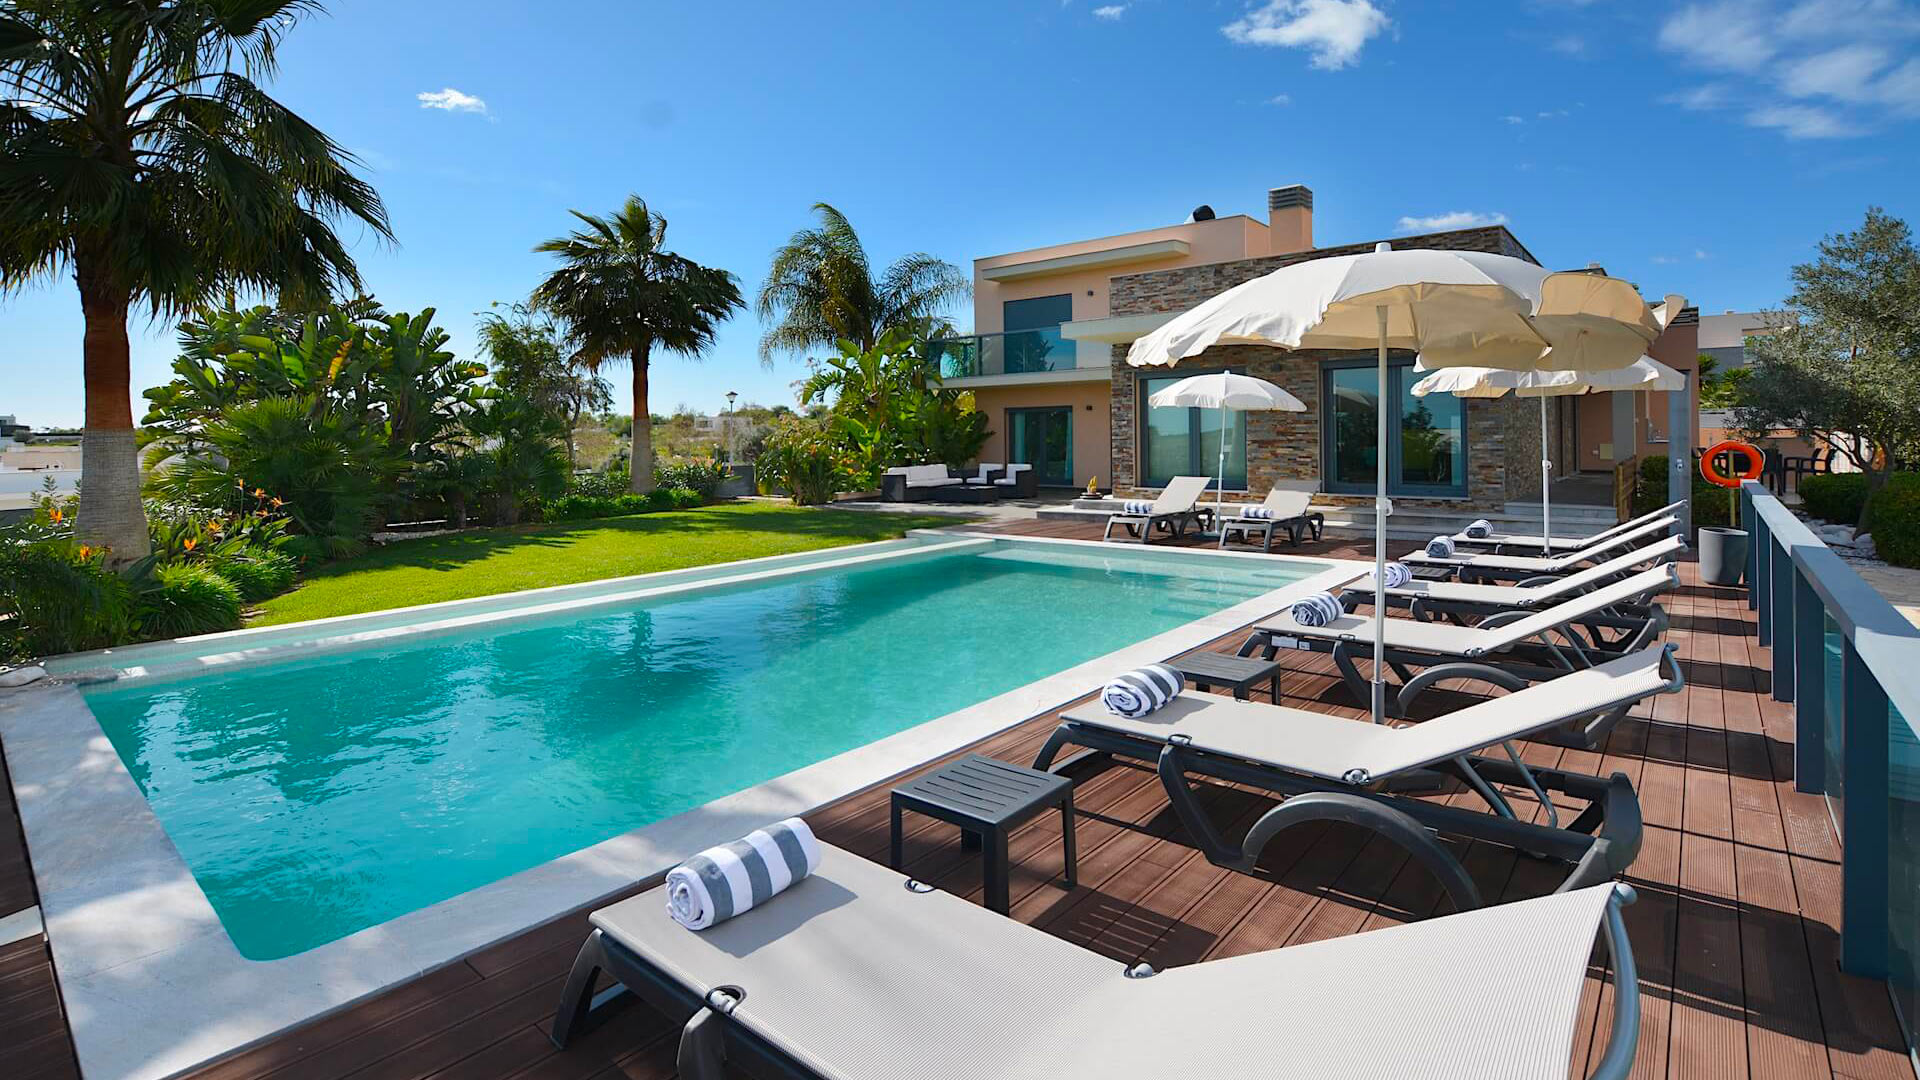 Villa Villa Junas, Rental in Algarve